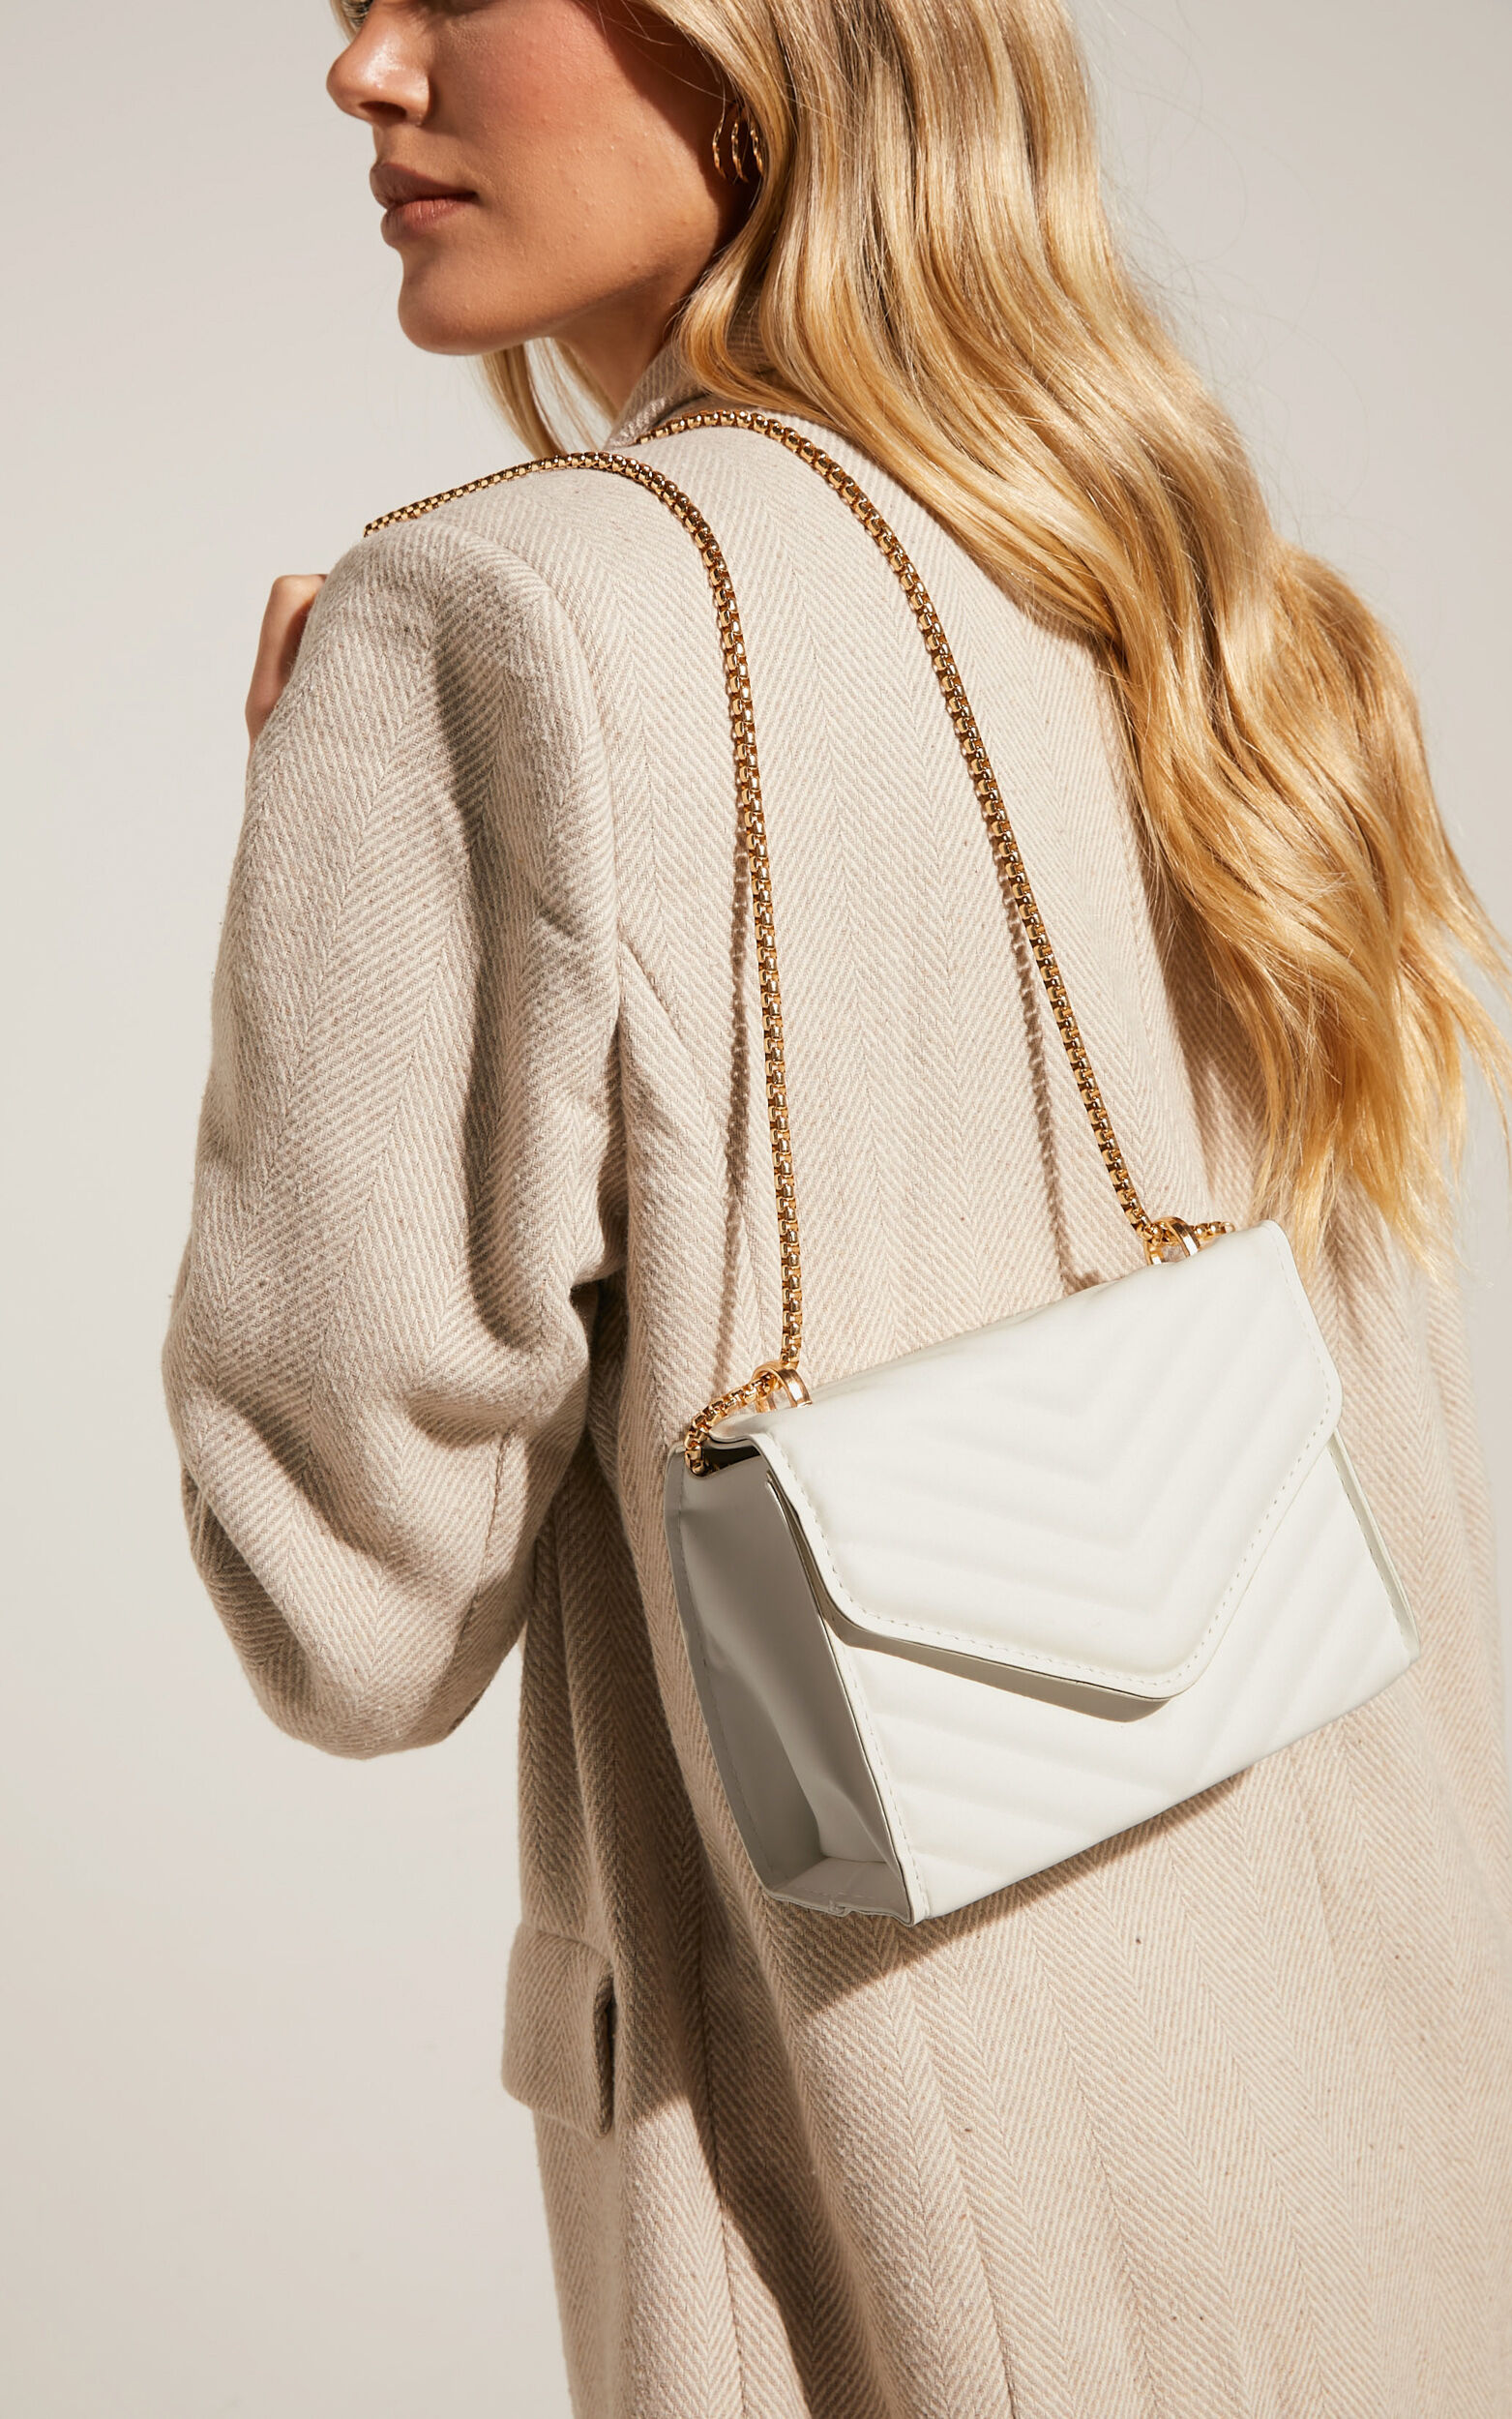 Kalinda Bag - Double Box Chain Shoulder Bag in White - NoSize, WHT1